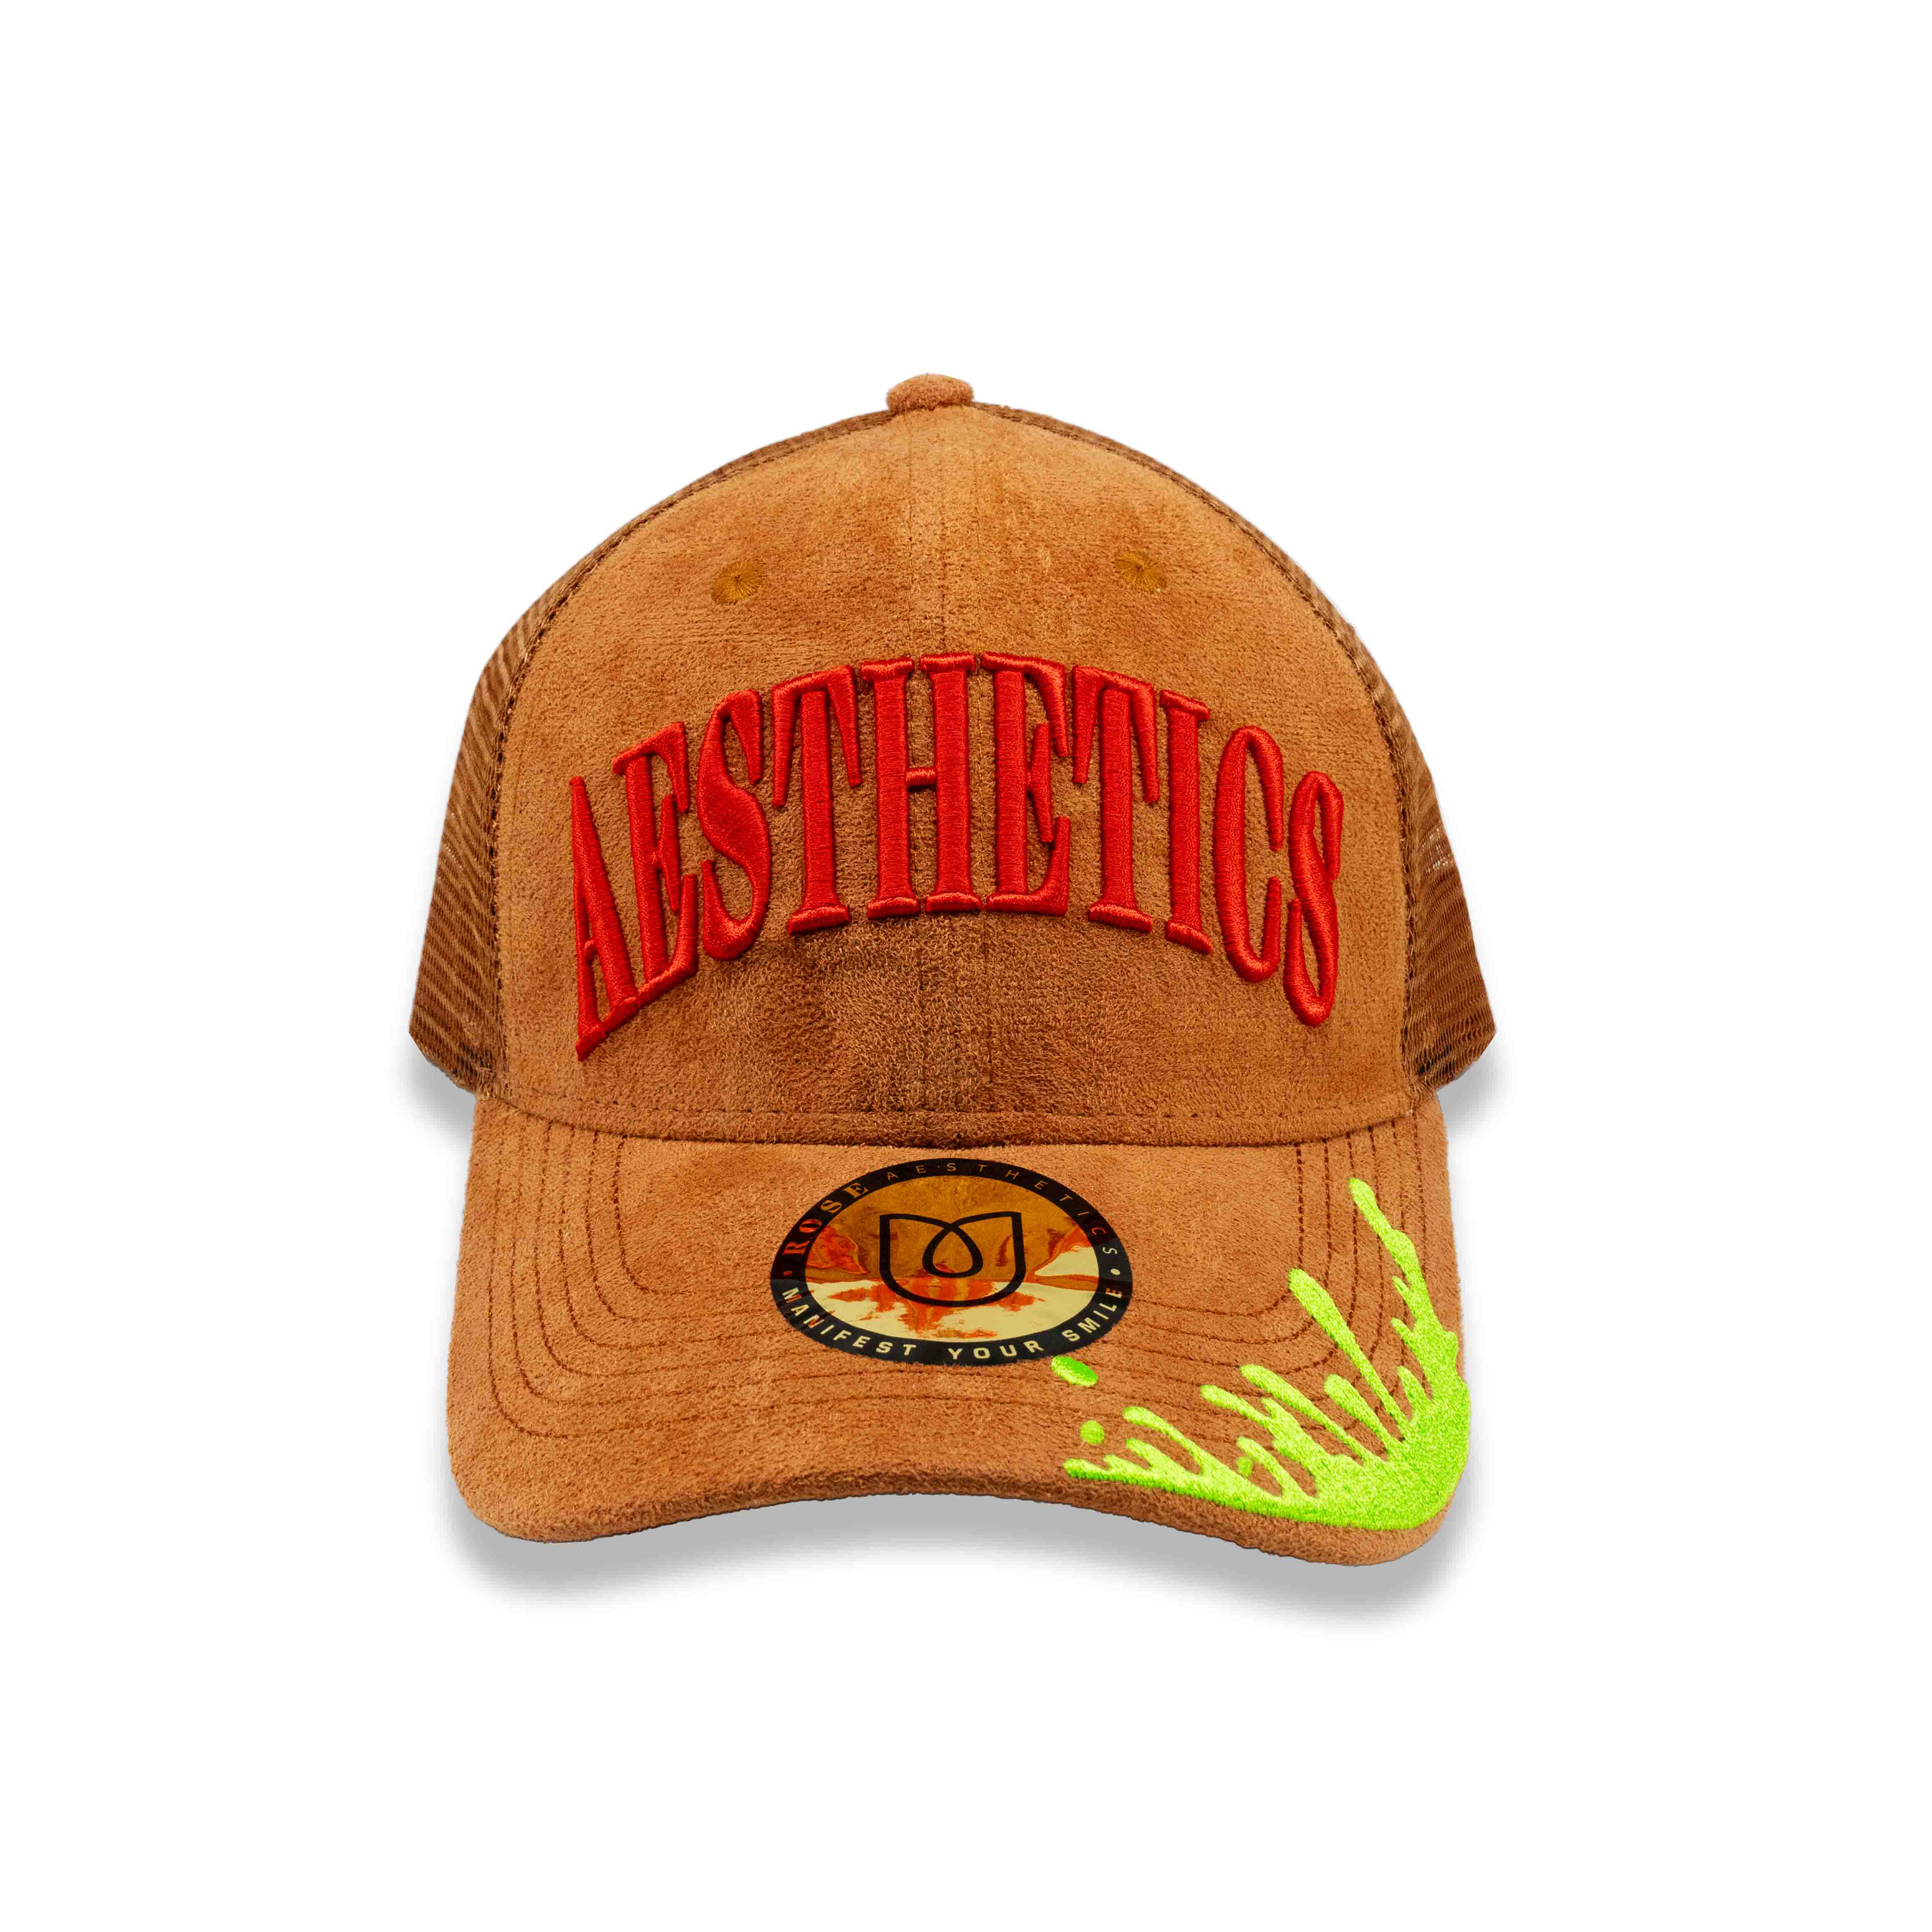 Aesthetics Logo Hat